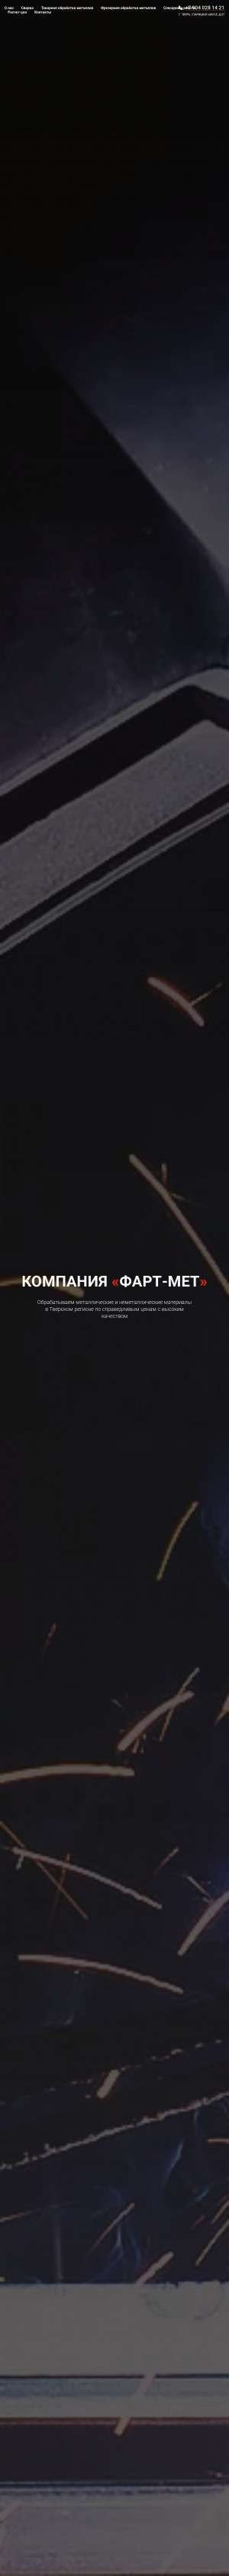 Предпросмотр для www.fart-met.ru — Фарт-Мет